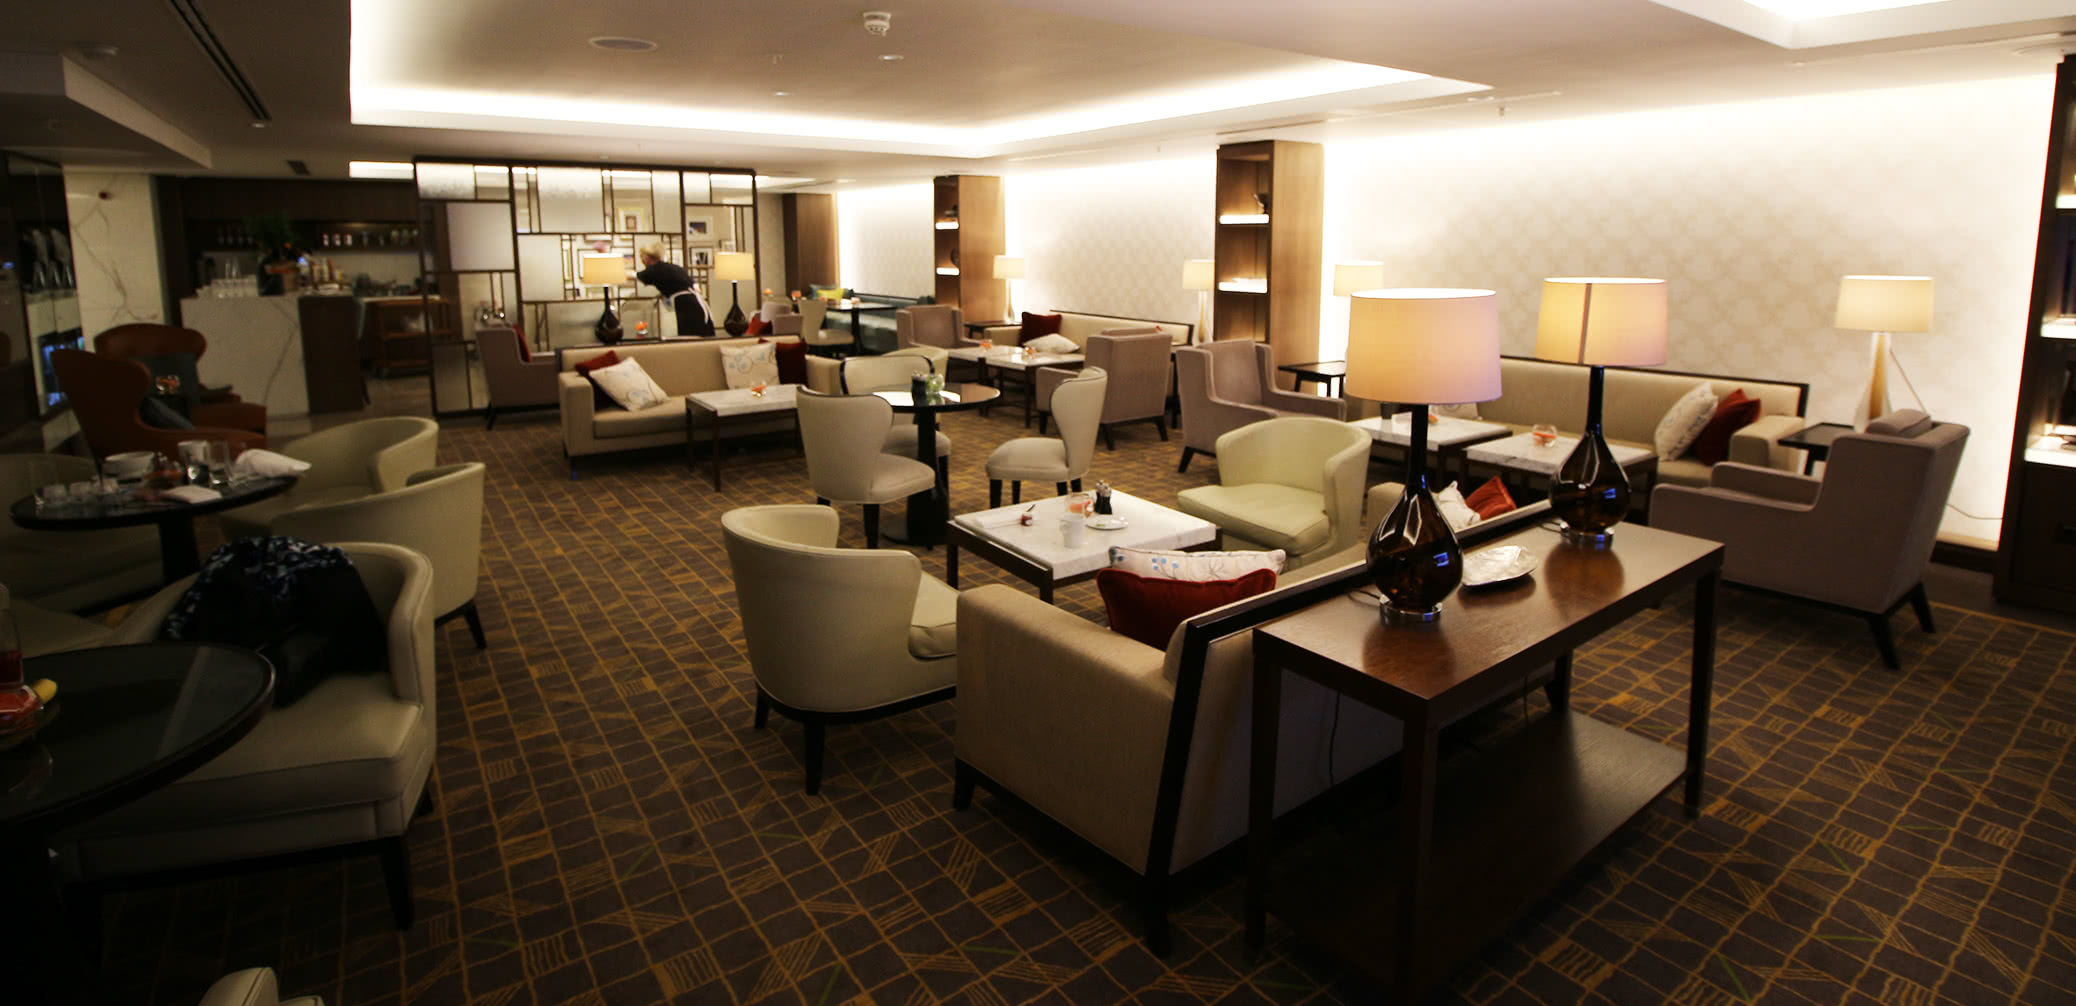 Best Hotel Executive Club Lounges In Birmingham, Alabama